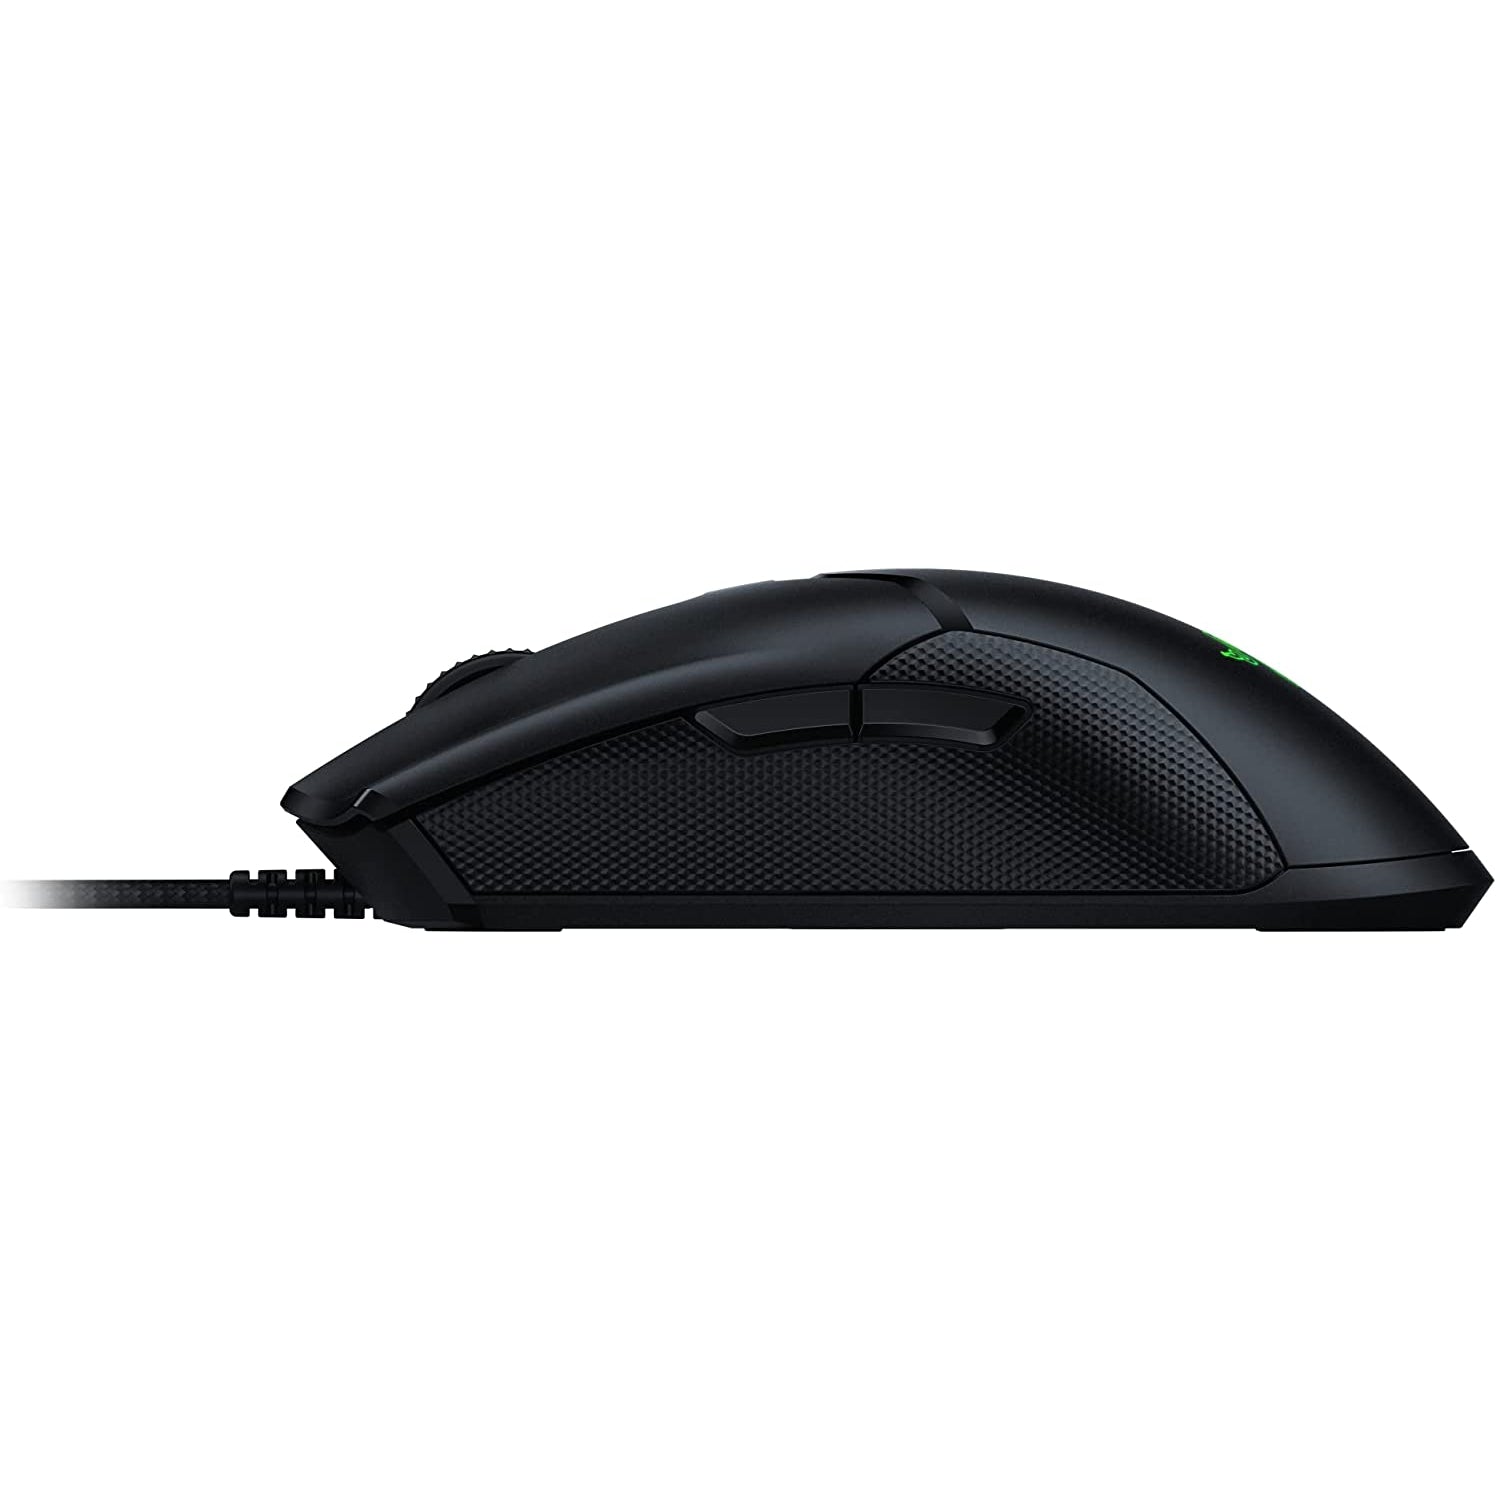 Razer Viper Ambidextrous Wired Gaming Mouse - Black - Refurbished Pristine